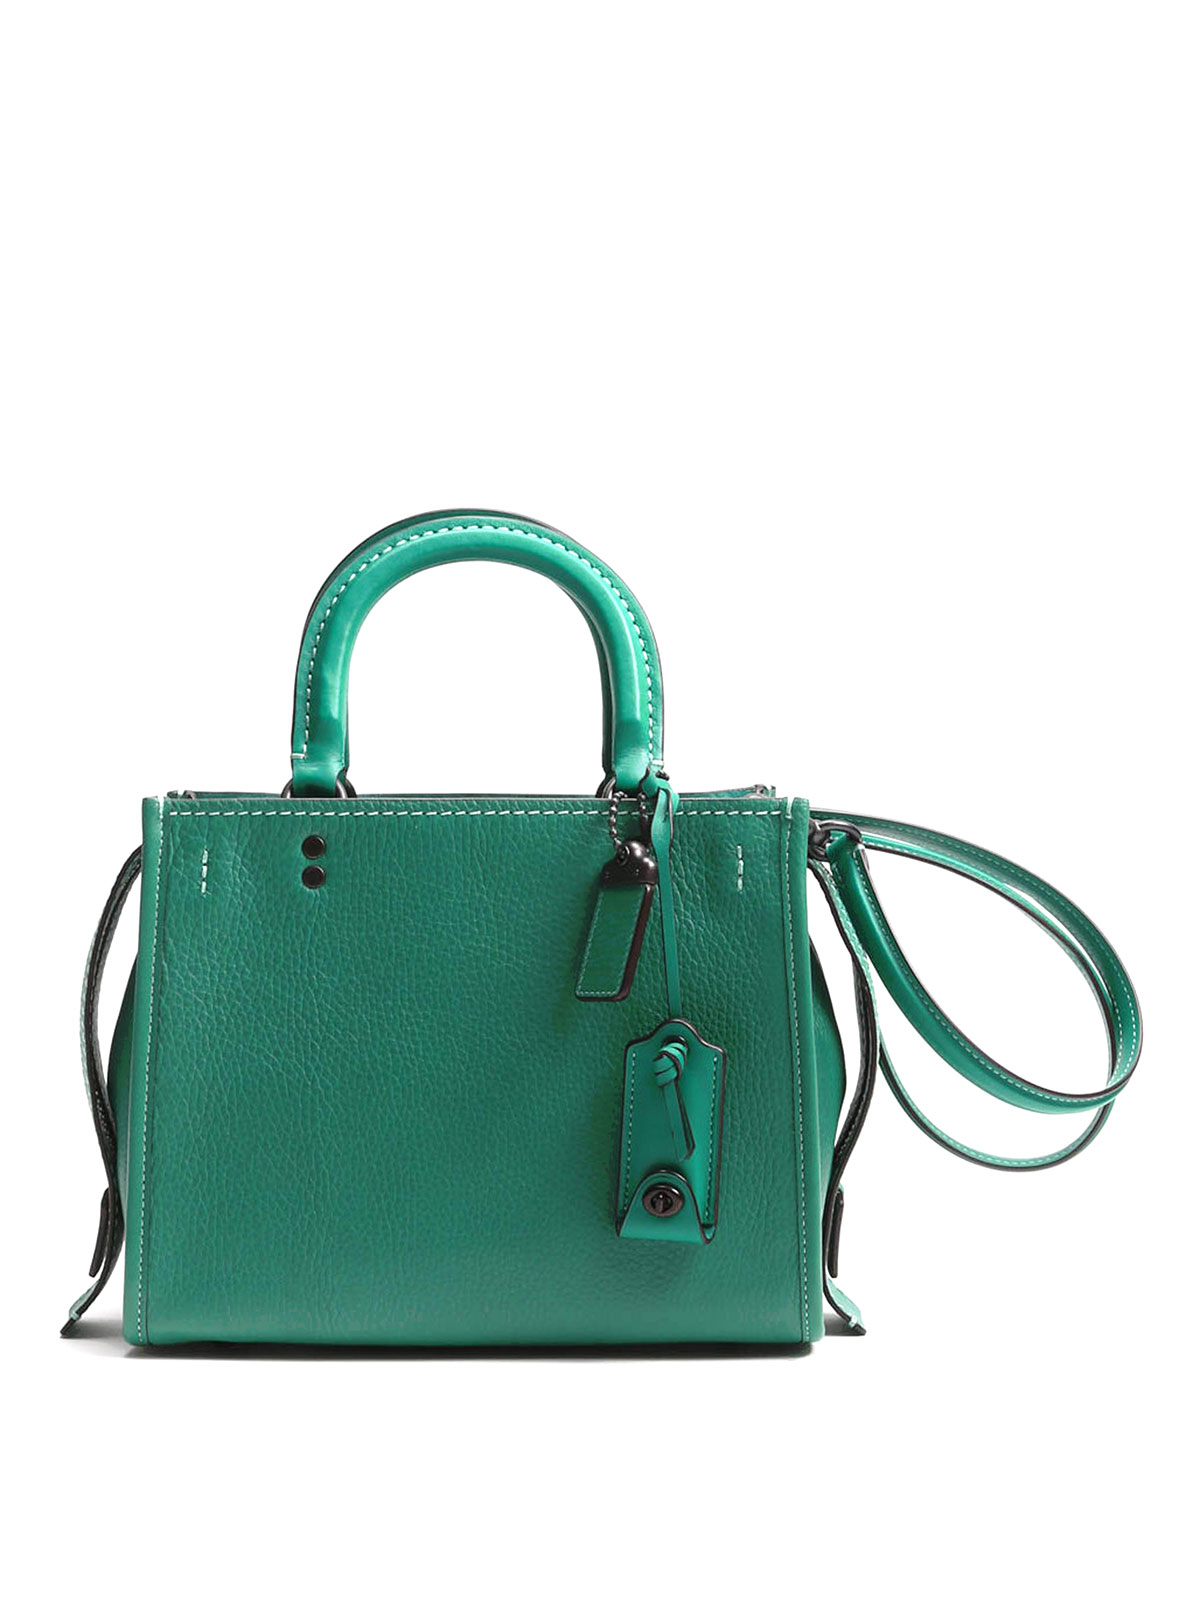 emerald green coach purse - Gem